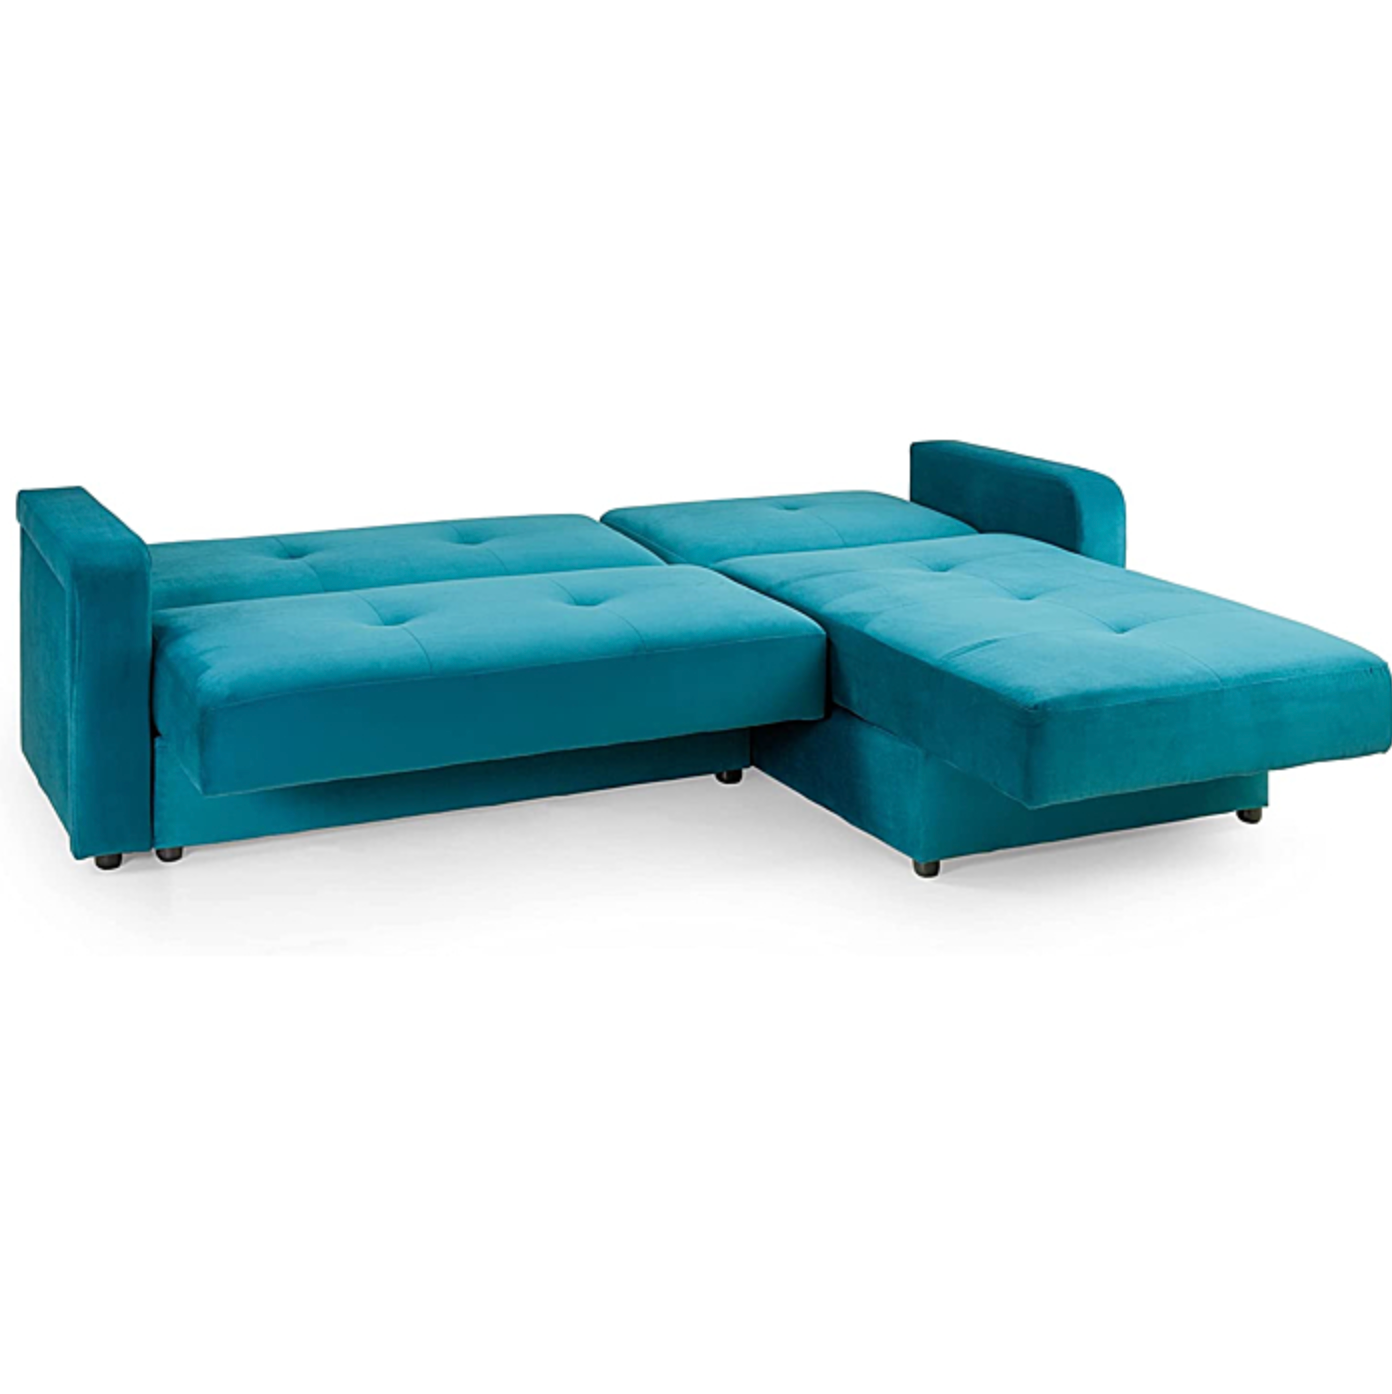 Destiny Corner Sofa Bed with Storage Teal Velvet Fabric